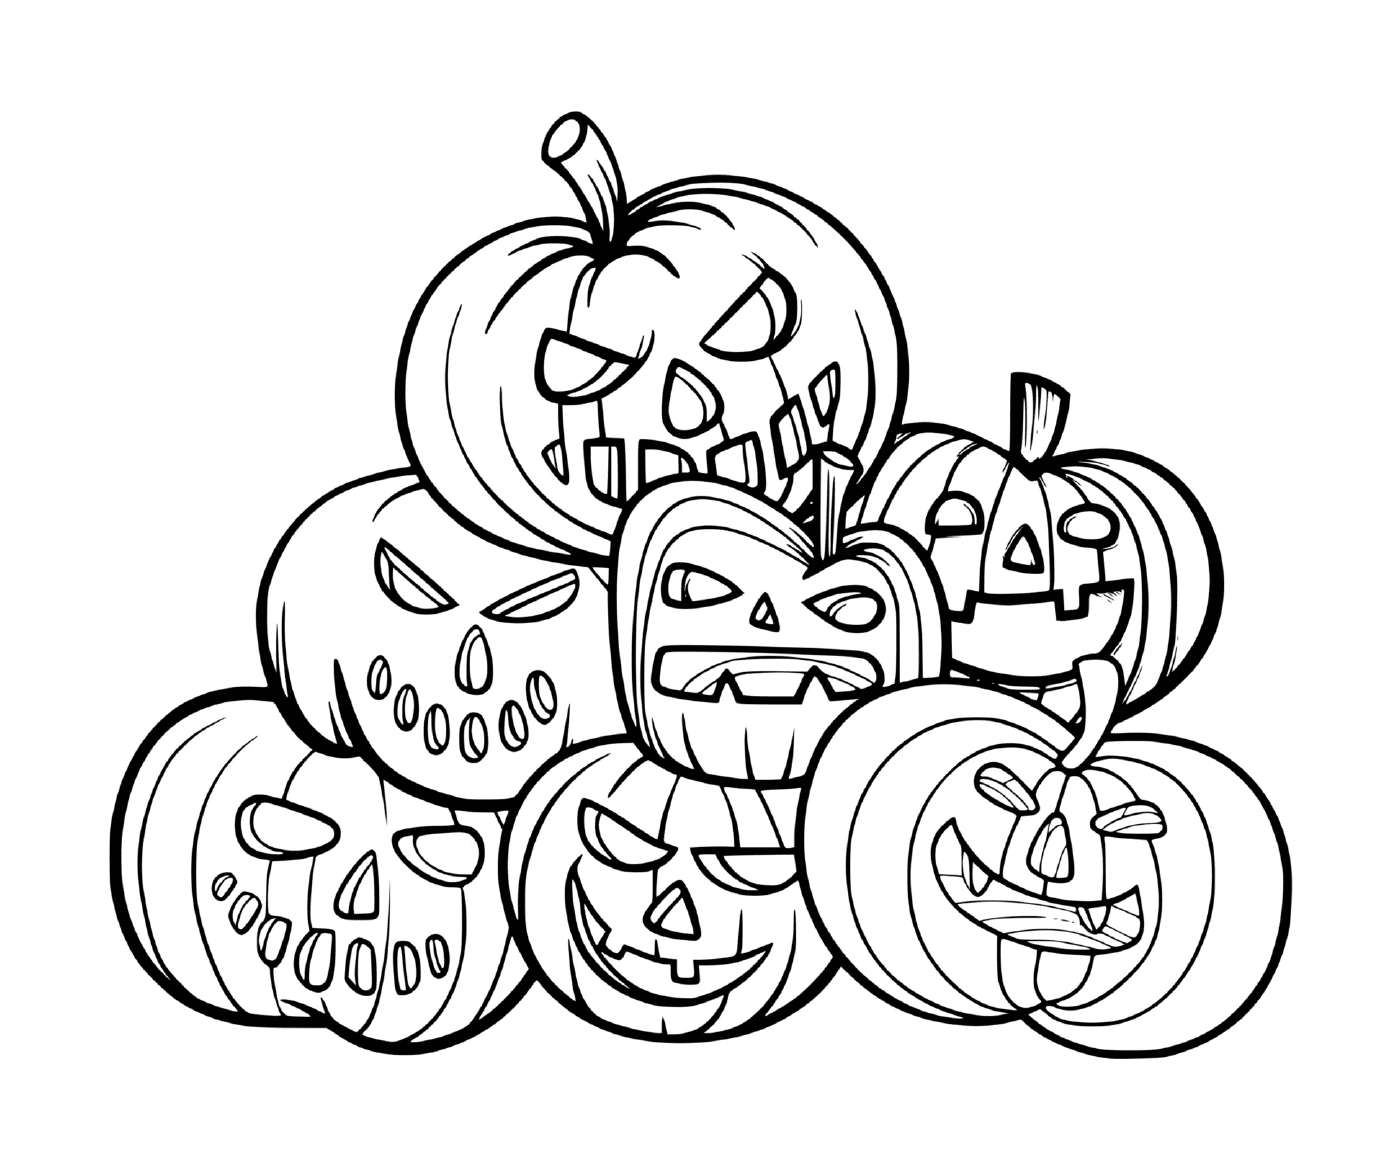  A pile of evil pumpkins 